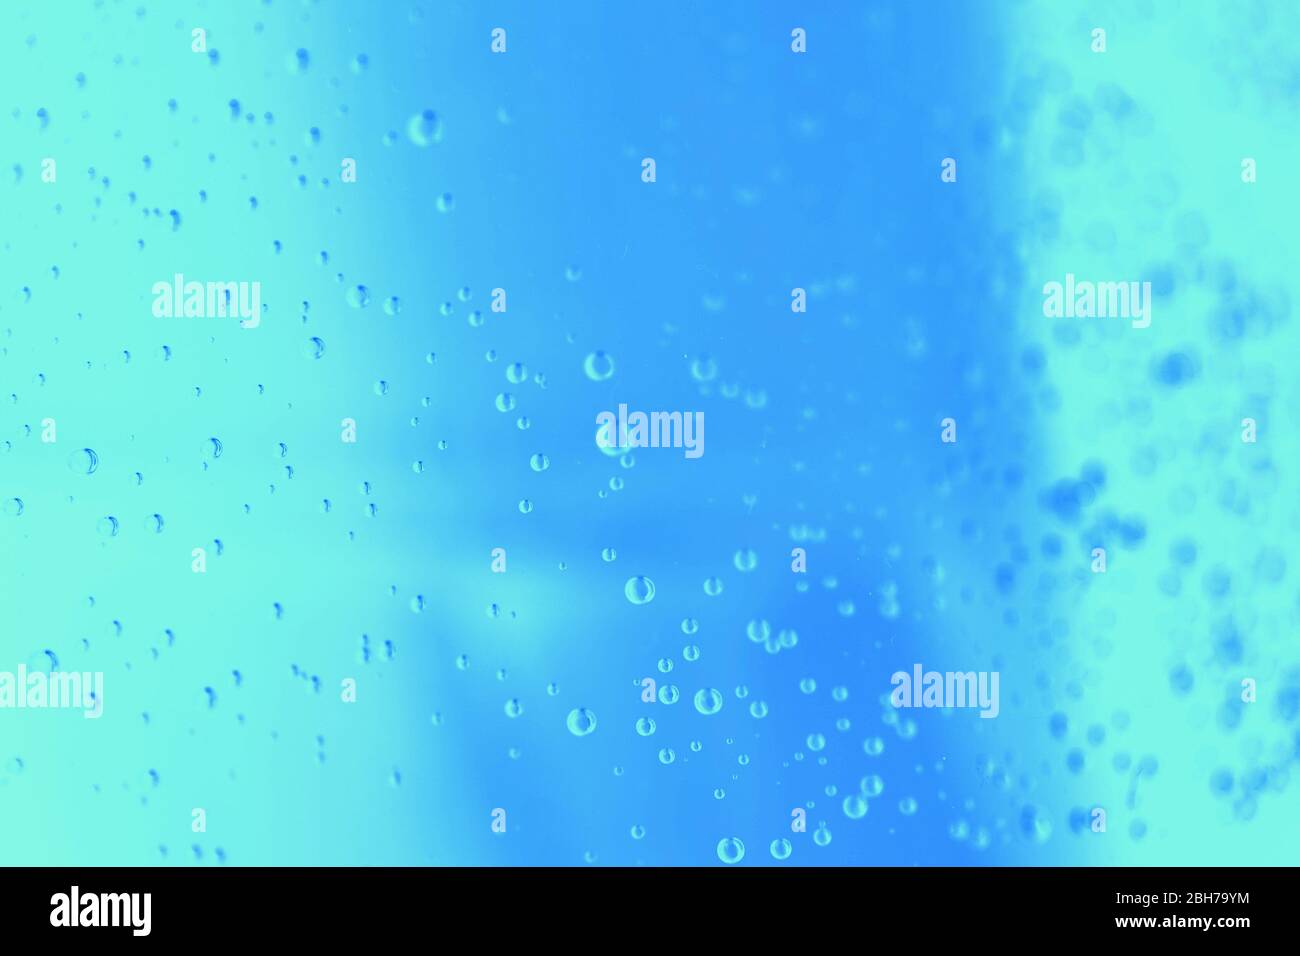 https://c8.alamy.com/comp/2BH79YM/blue-aquamarine-aqua-color-blurred-background-with-water-drops-2BH79YM.jpg